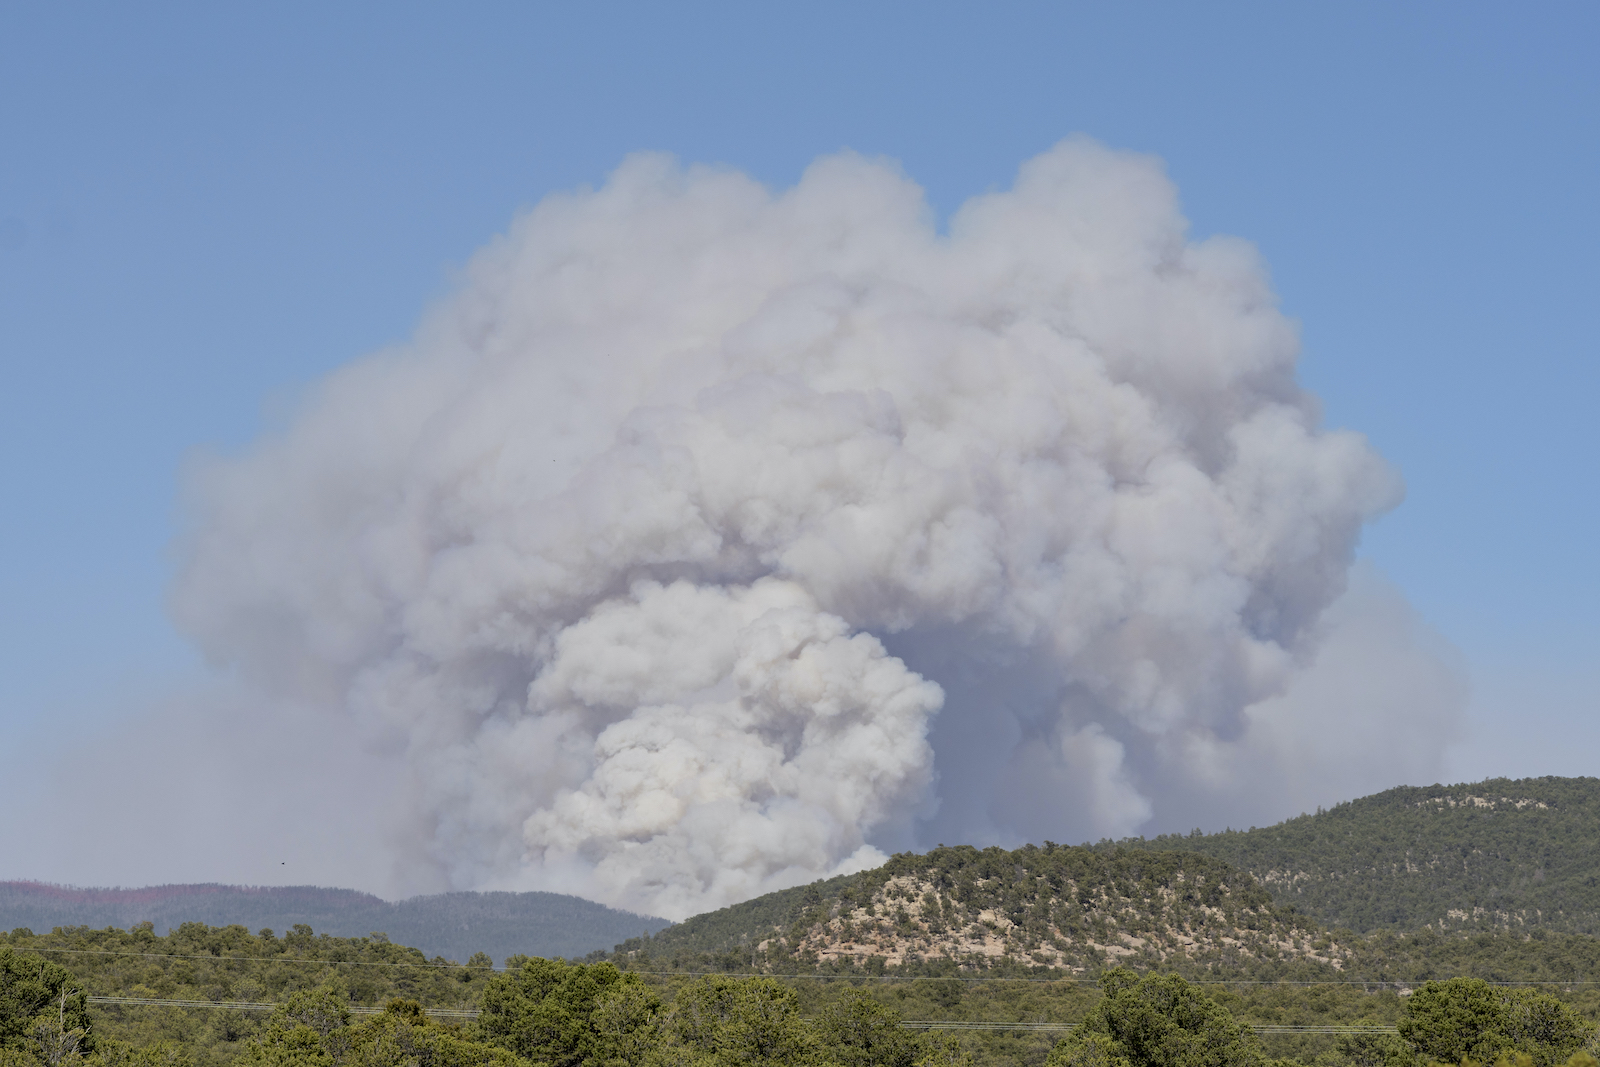 a huge cloud of smoke rises above a desert landscape